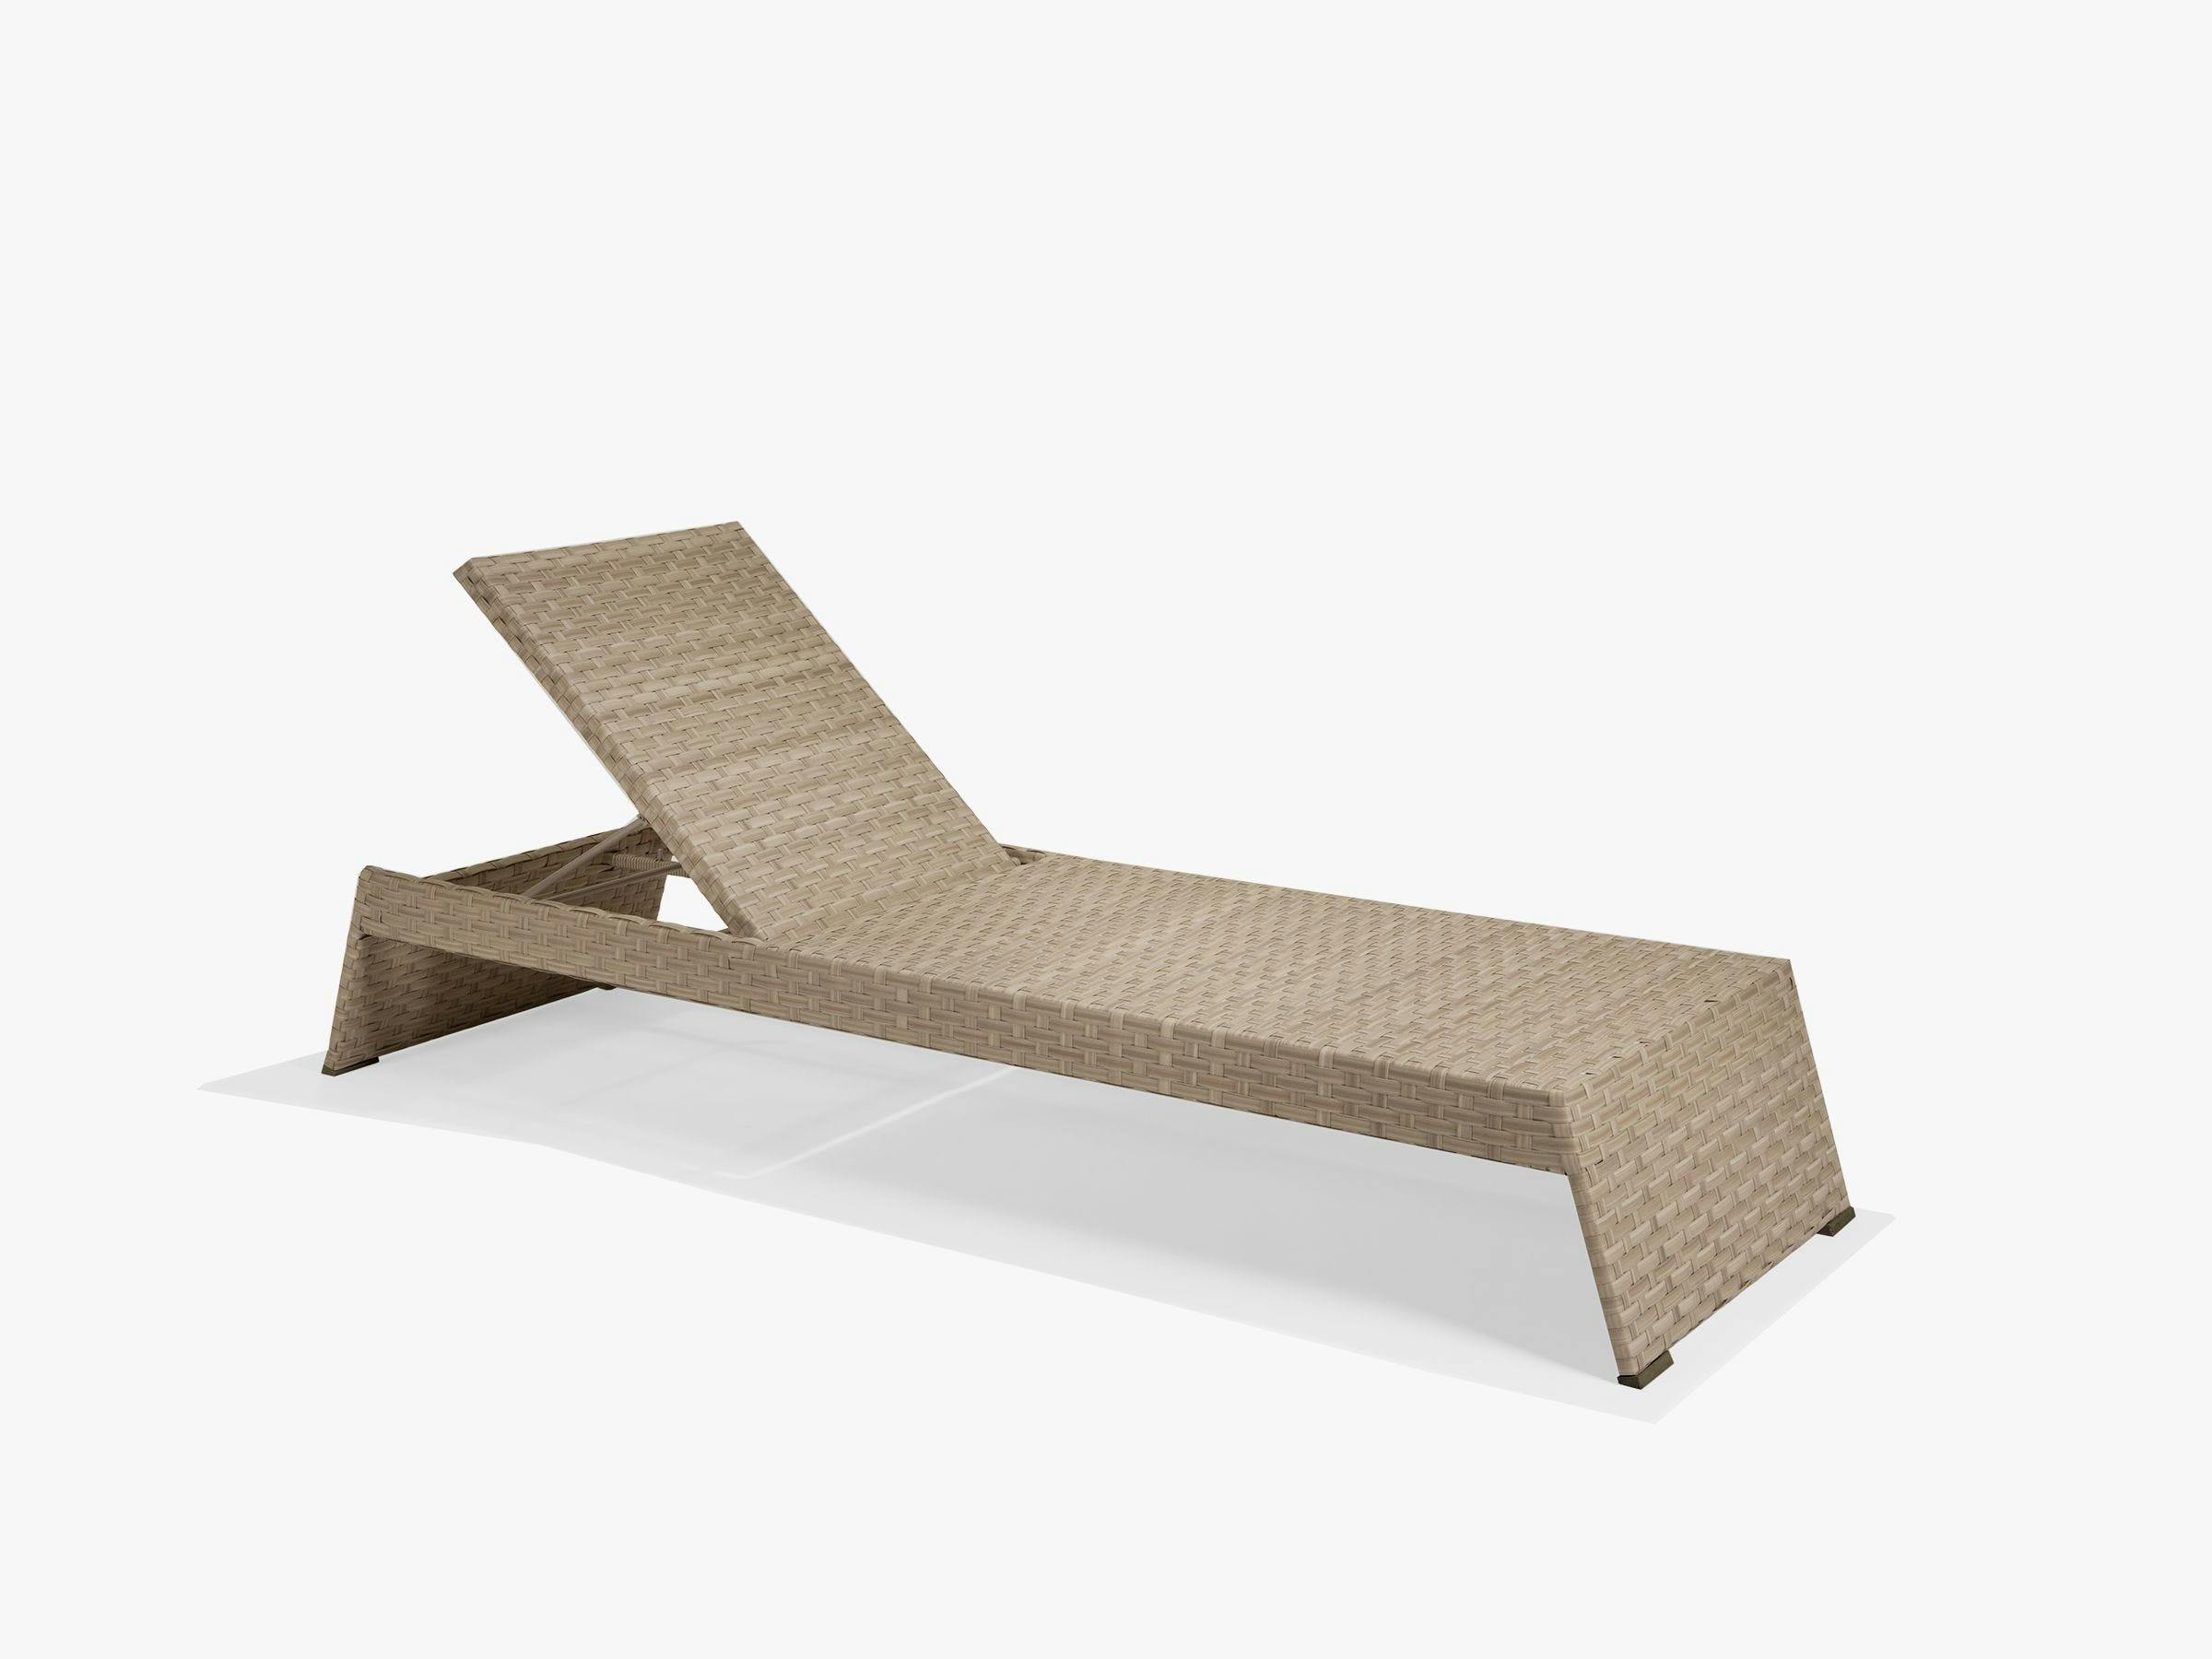 Nexus Chaise Lounge - Driftwood Weave